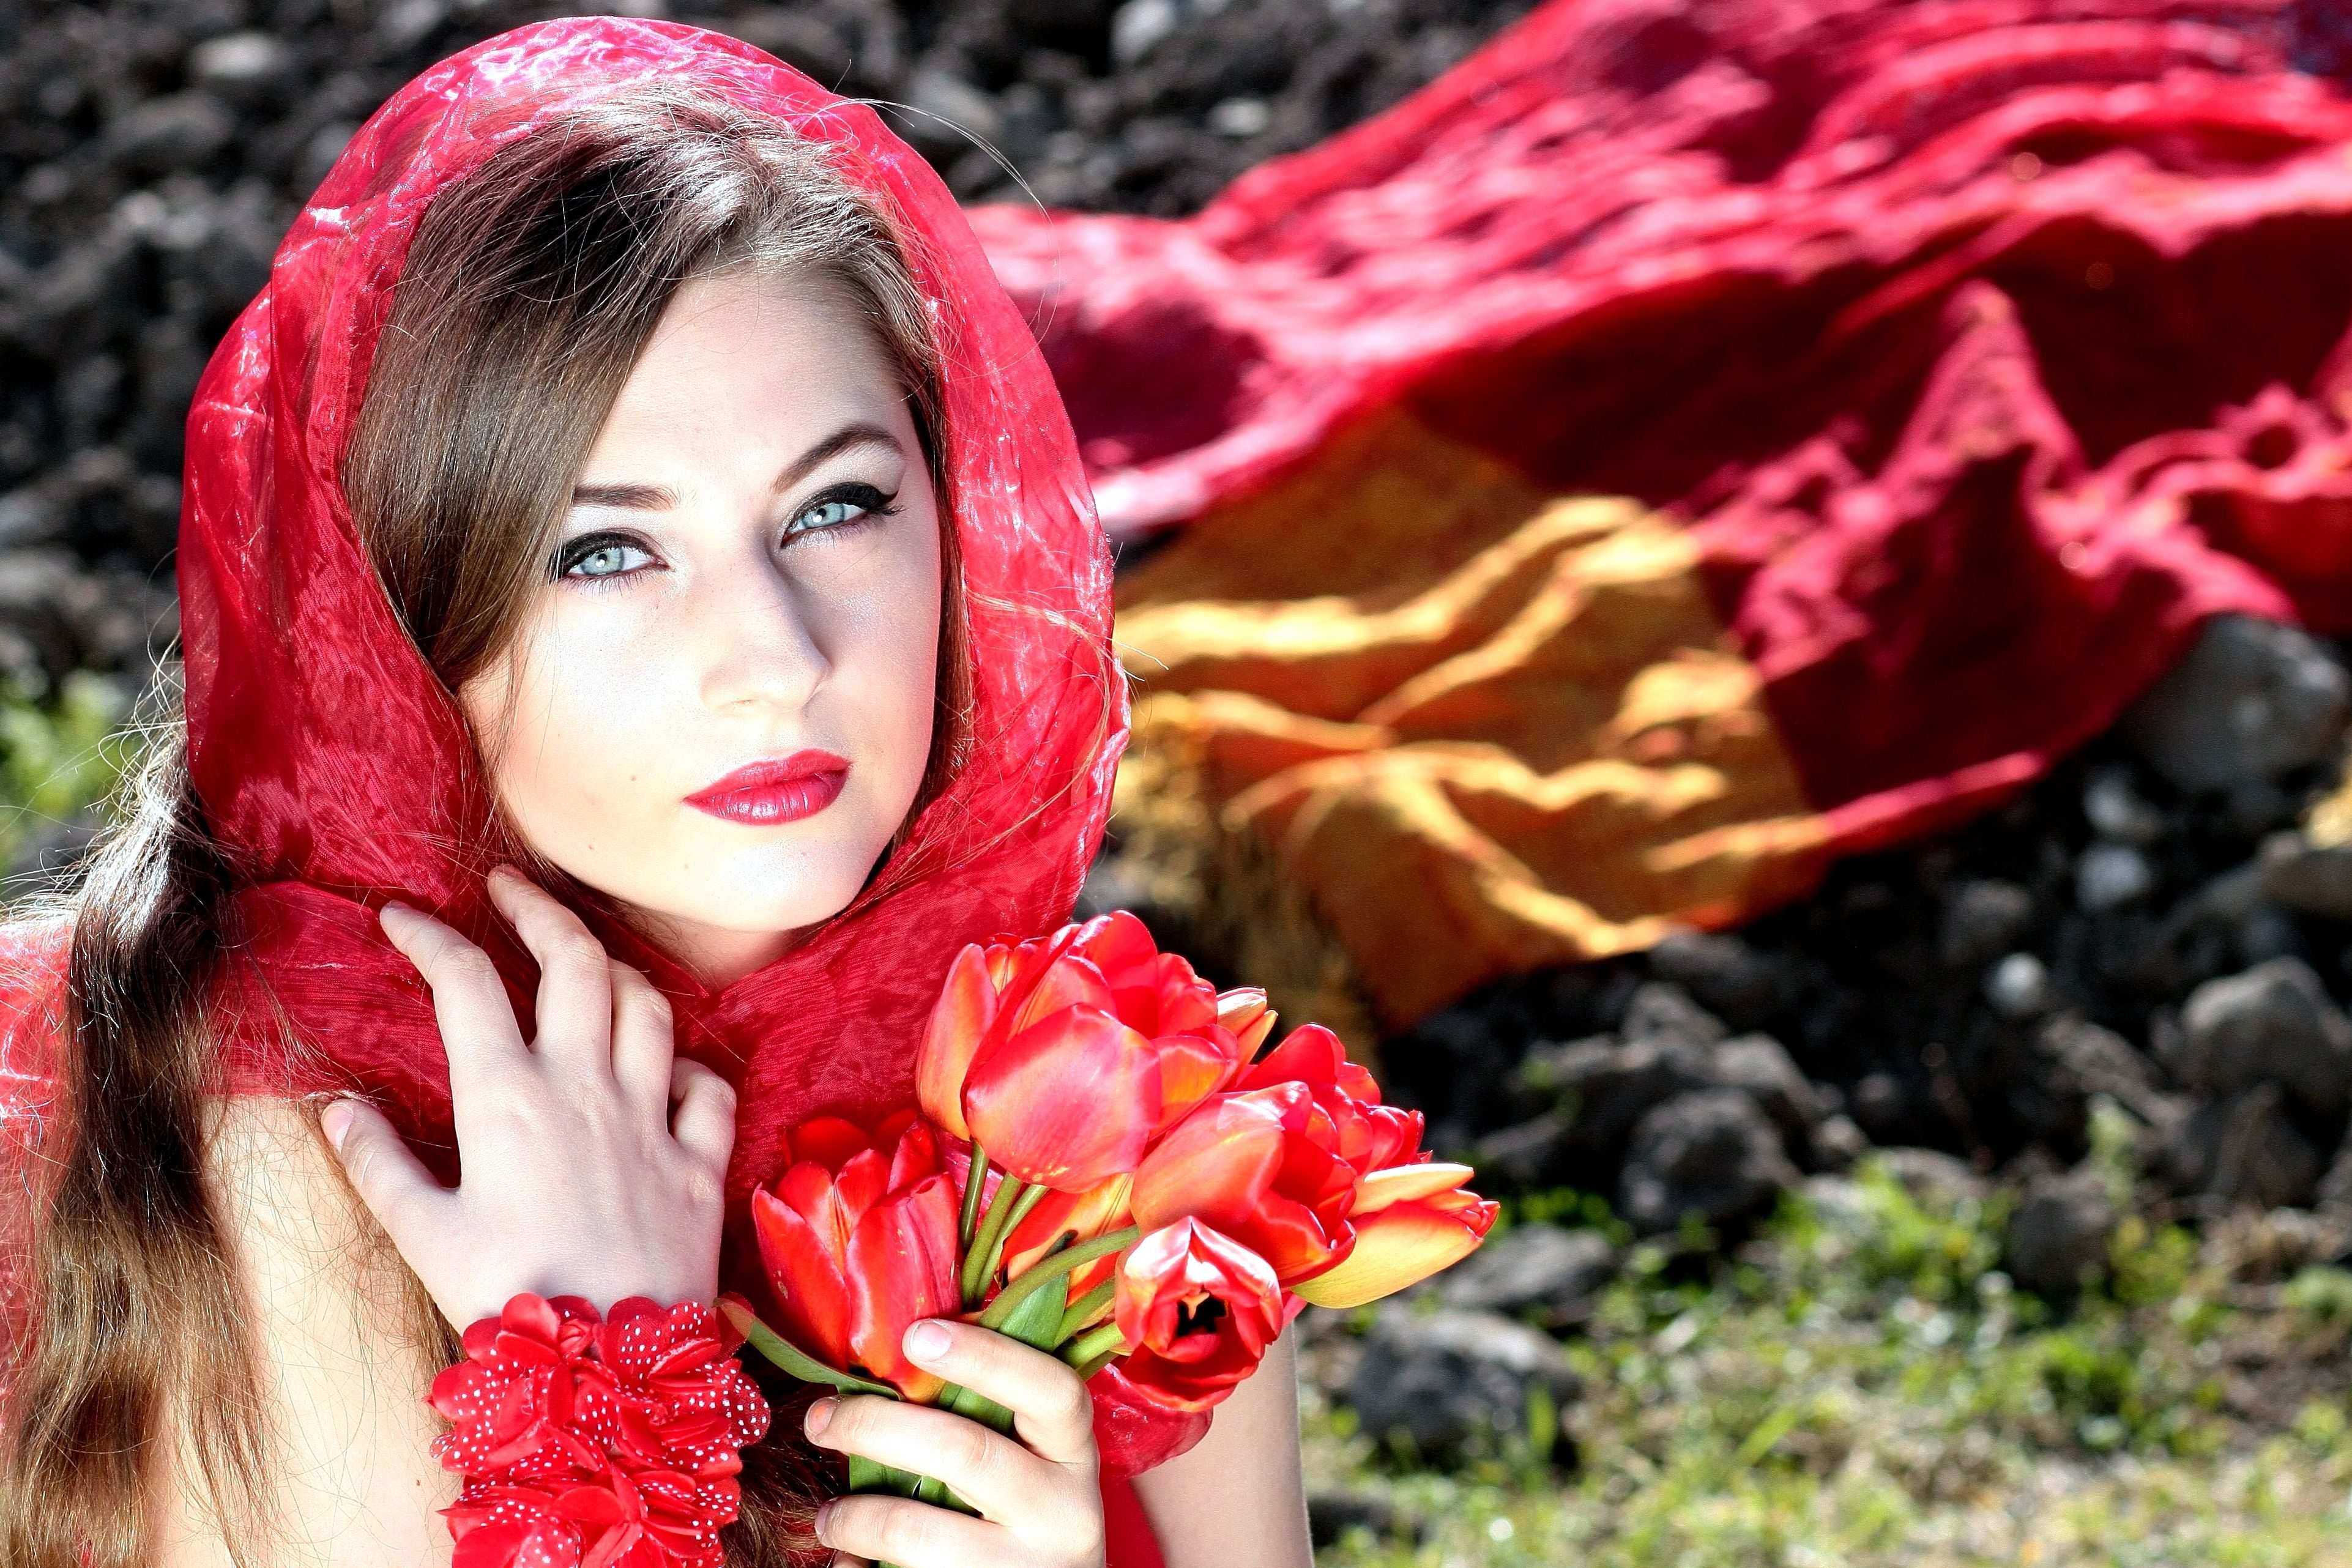 Free picture: pretty girl, red scarf, portrait